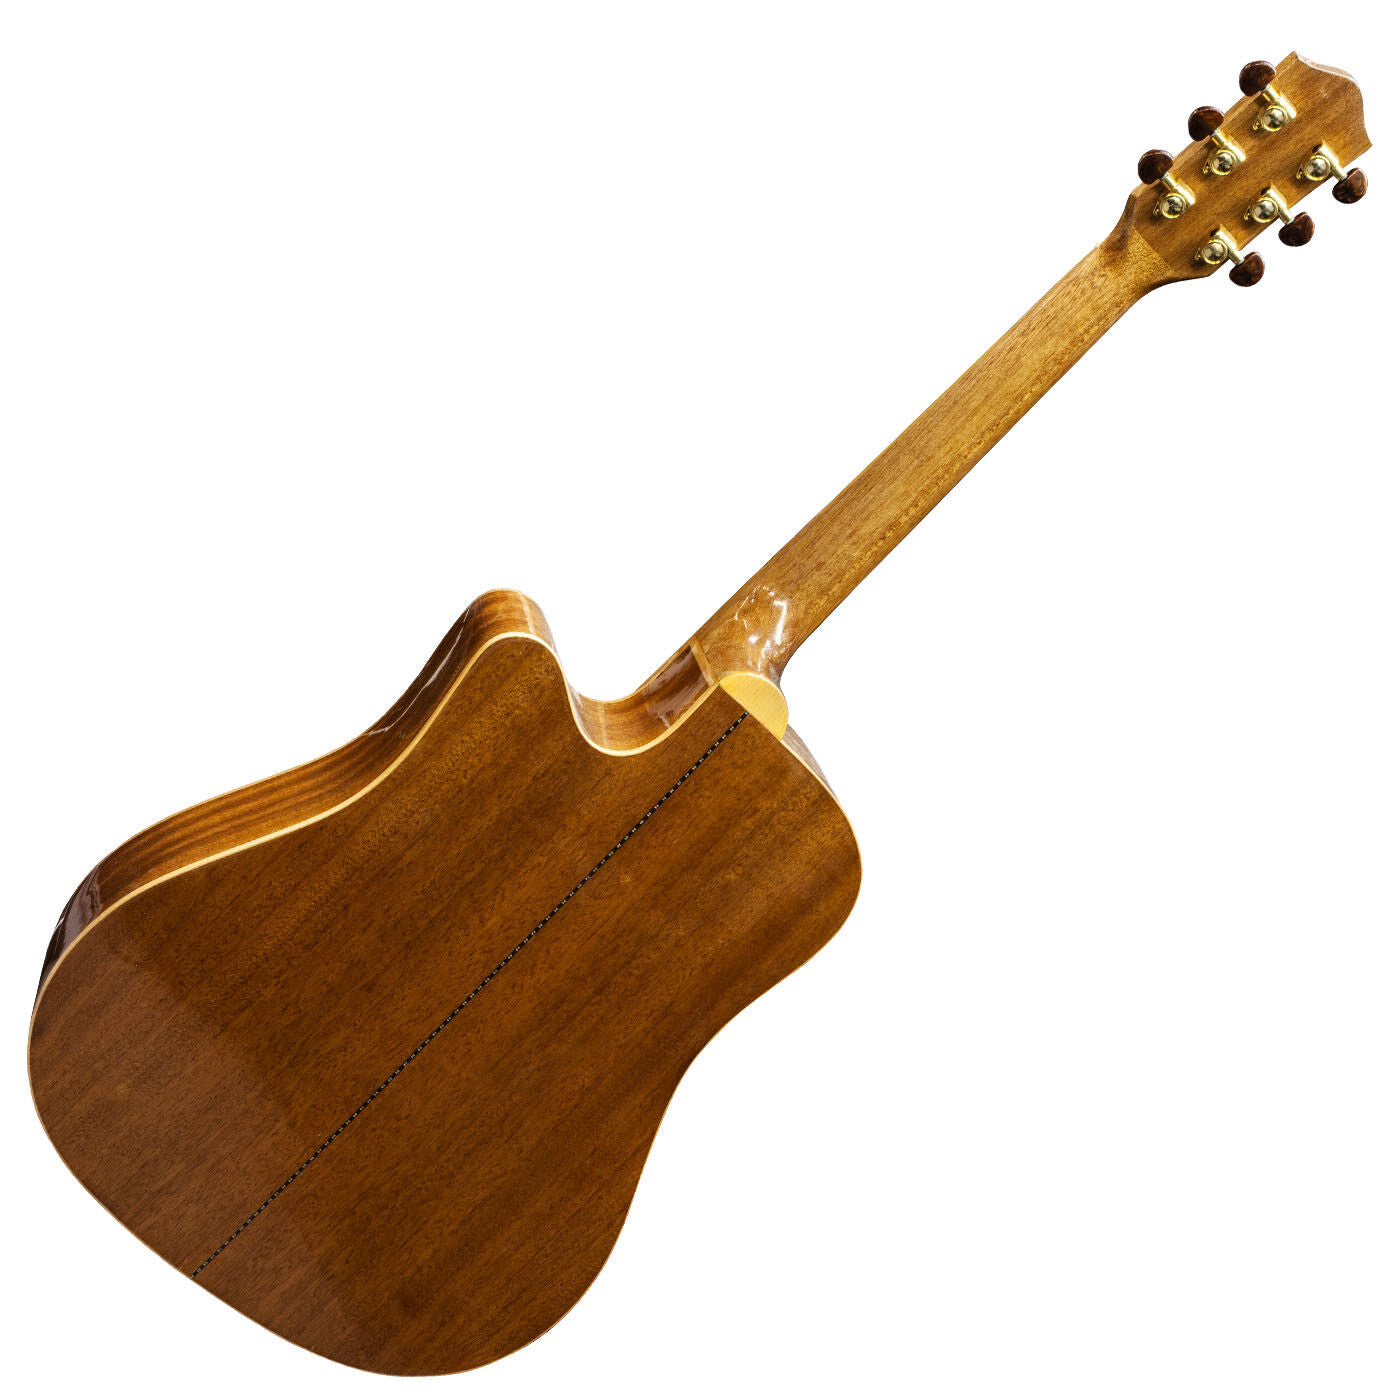 Earthfire GA6090SE Jumbo Electro Acoustic Cutway Guitar Steel String Solid Top--